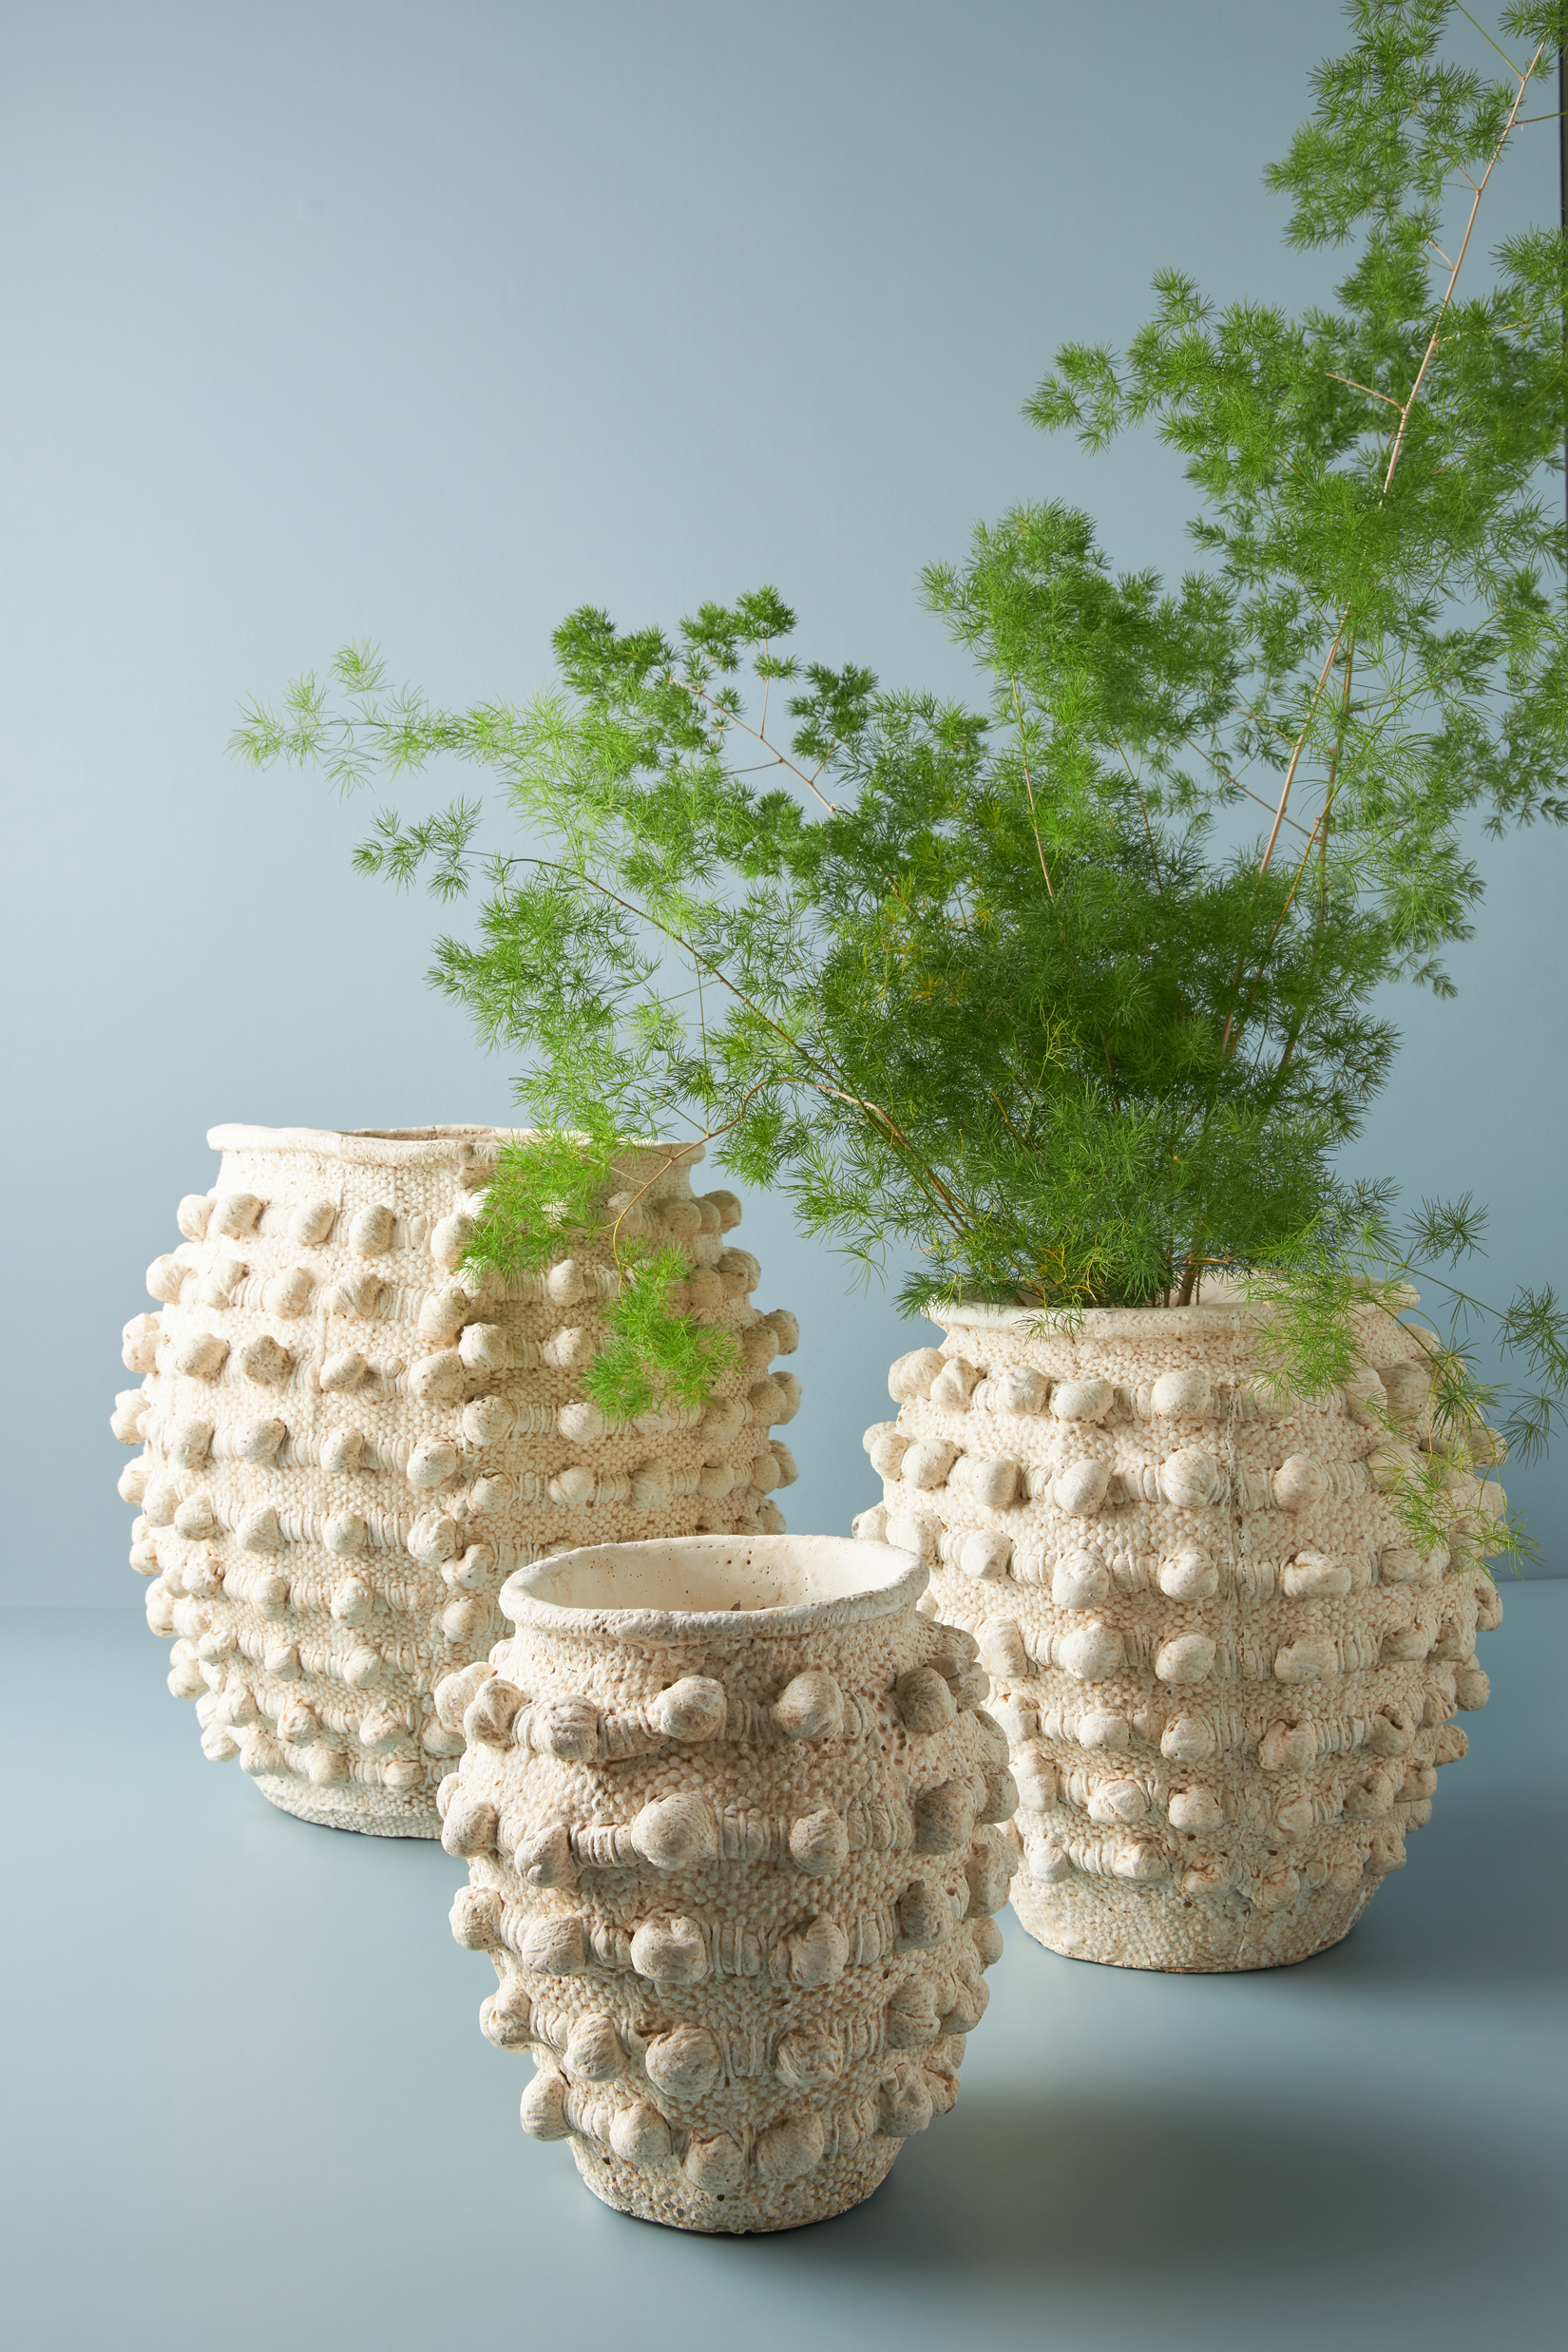 minka textured pots from anthropologie 2